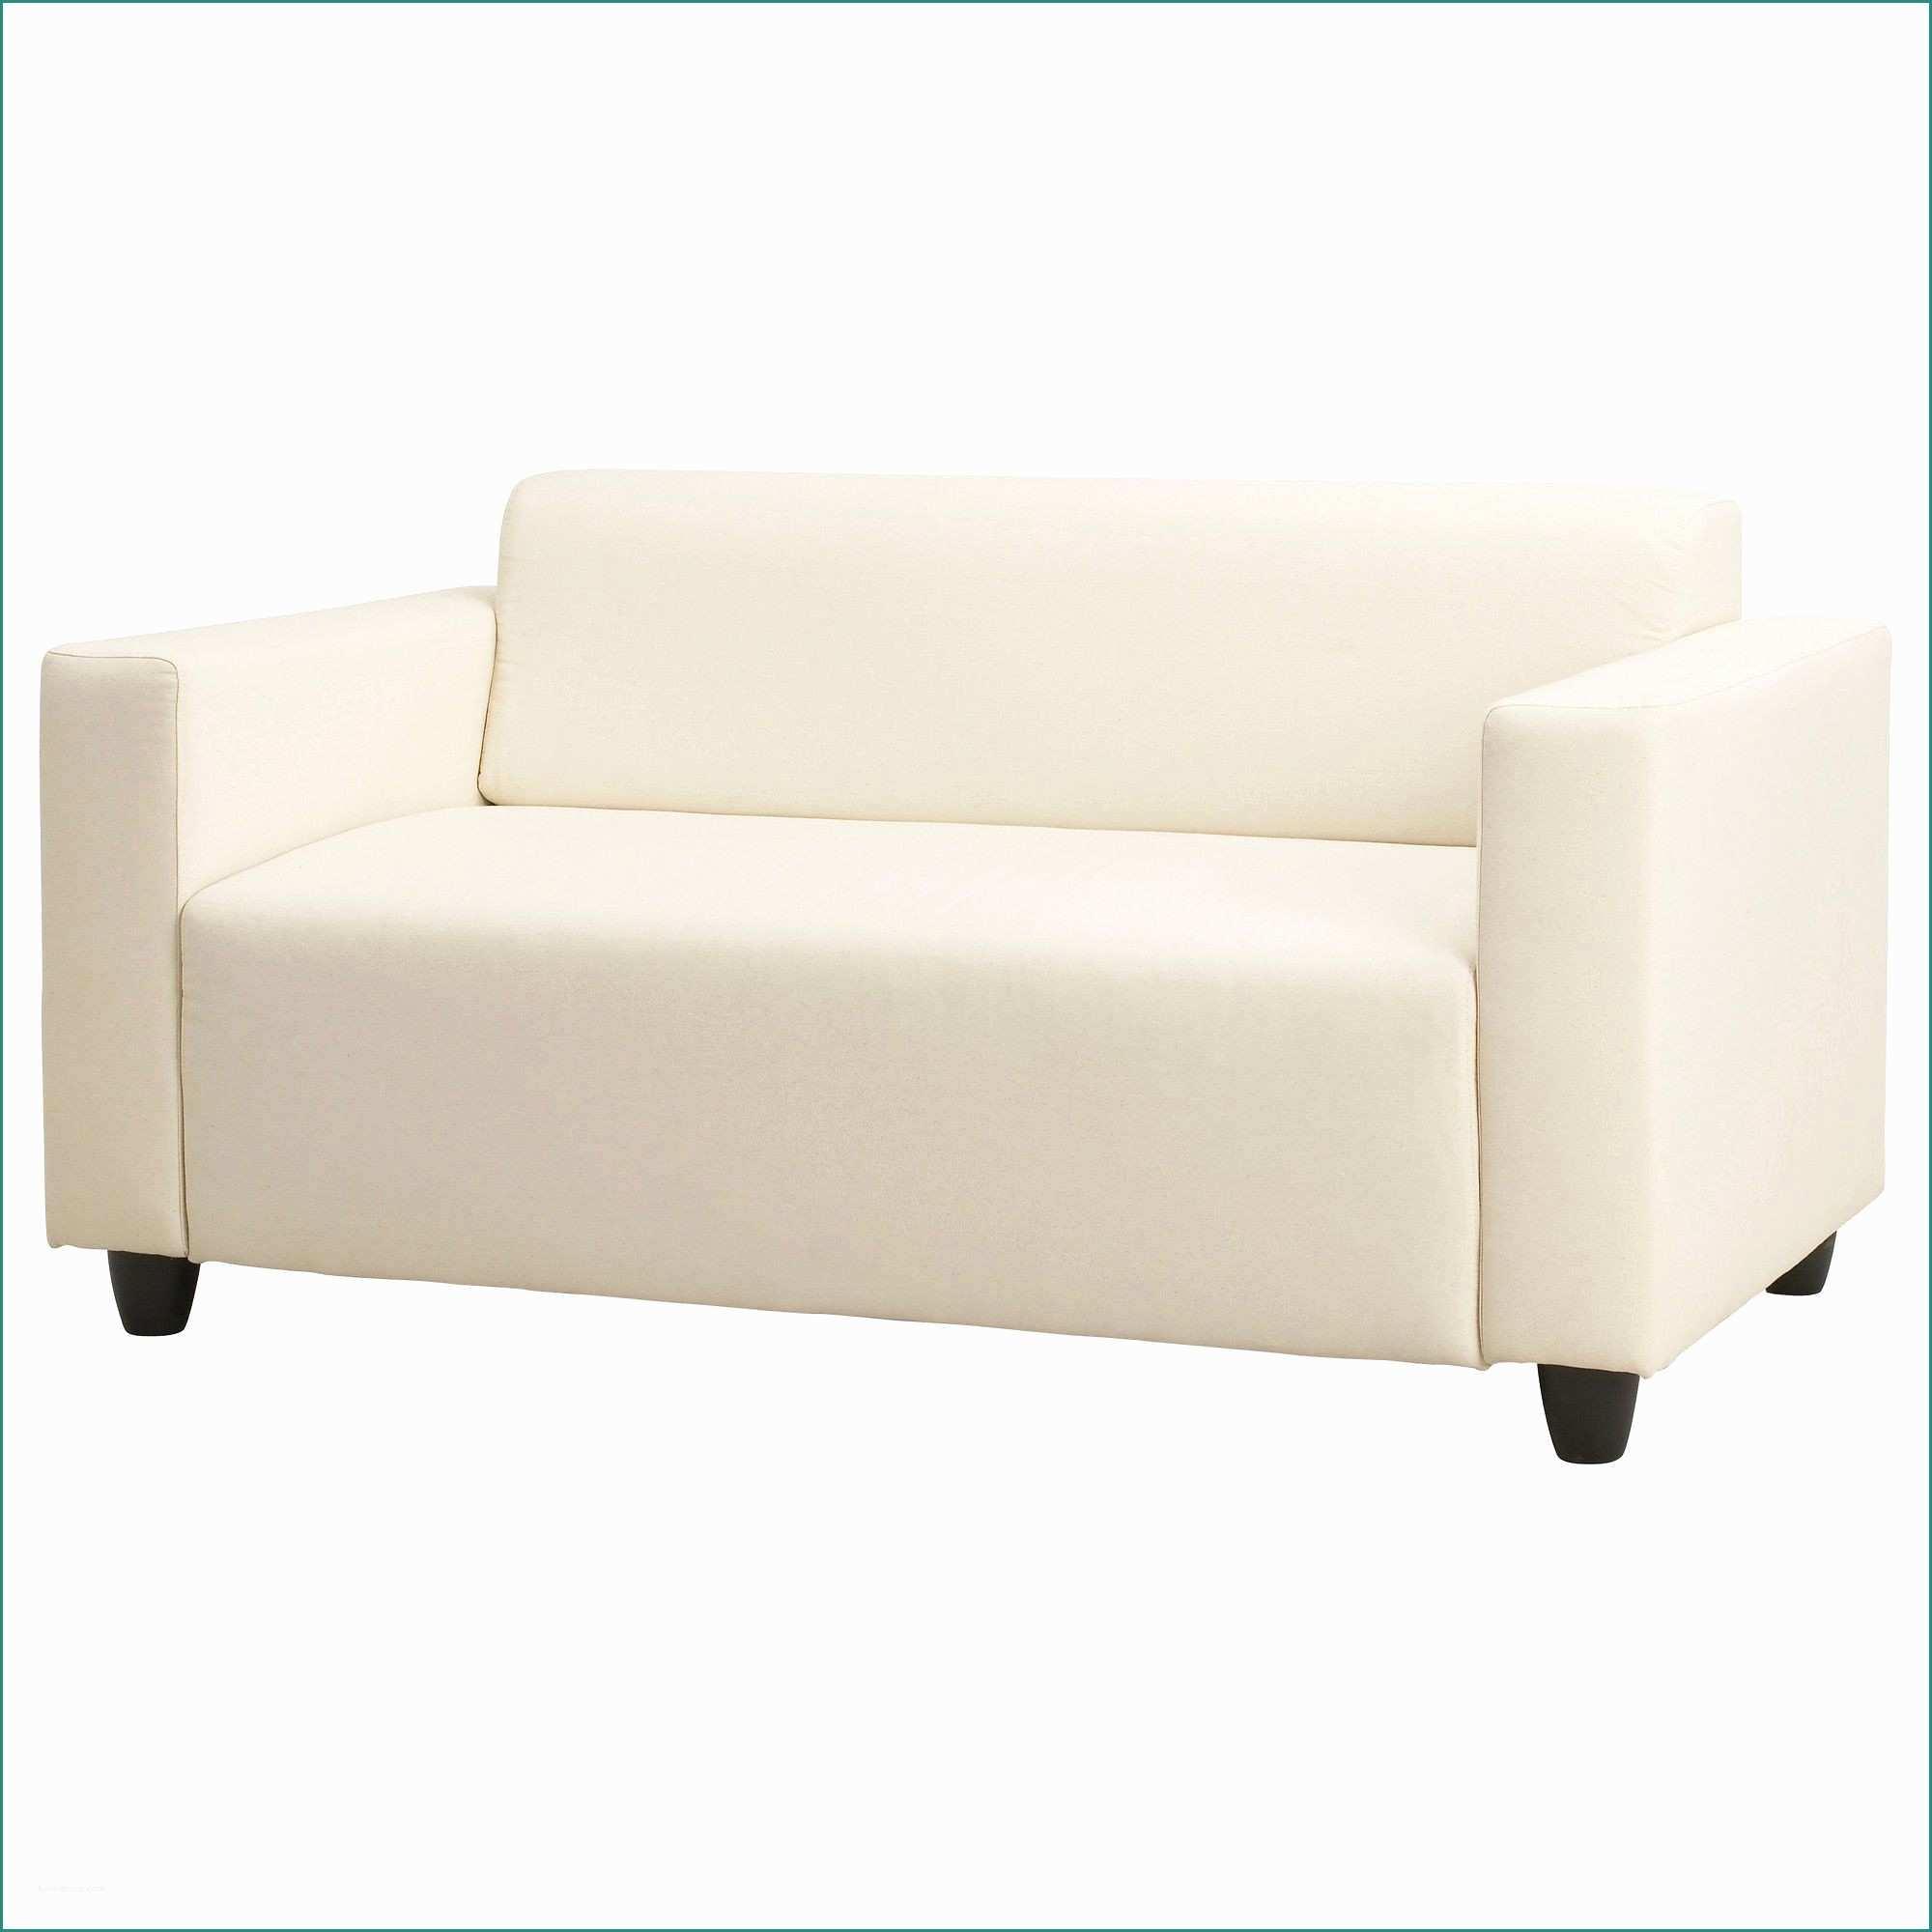 Chaise Longue Divano E Ikea Hagalund sofa Bed Maravilloso Ikea Ektorp Grau Genial Backabro